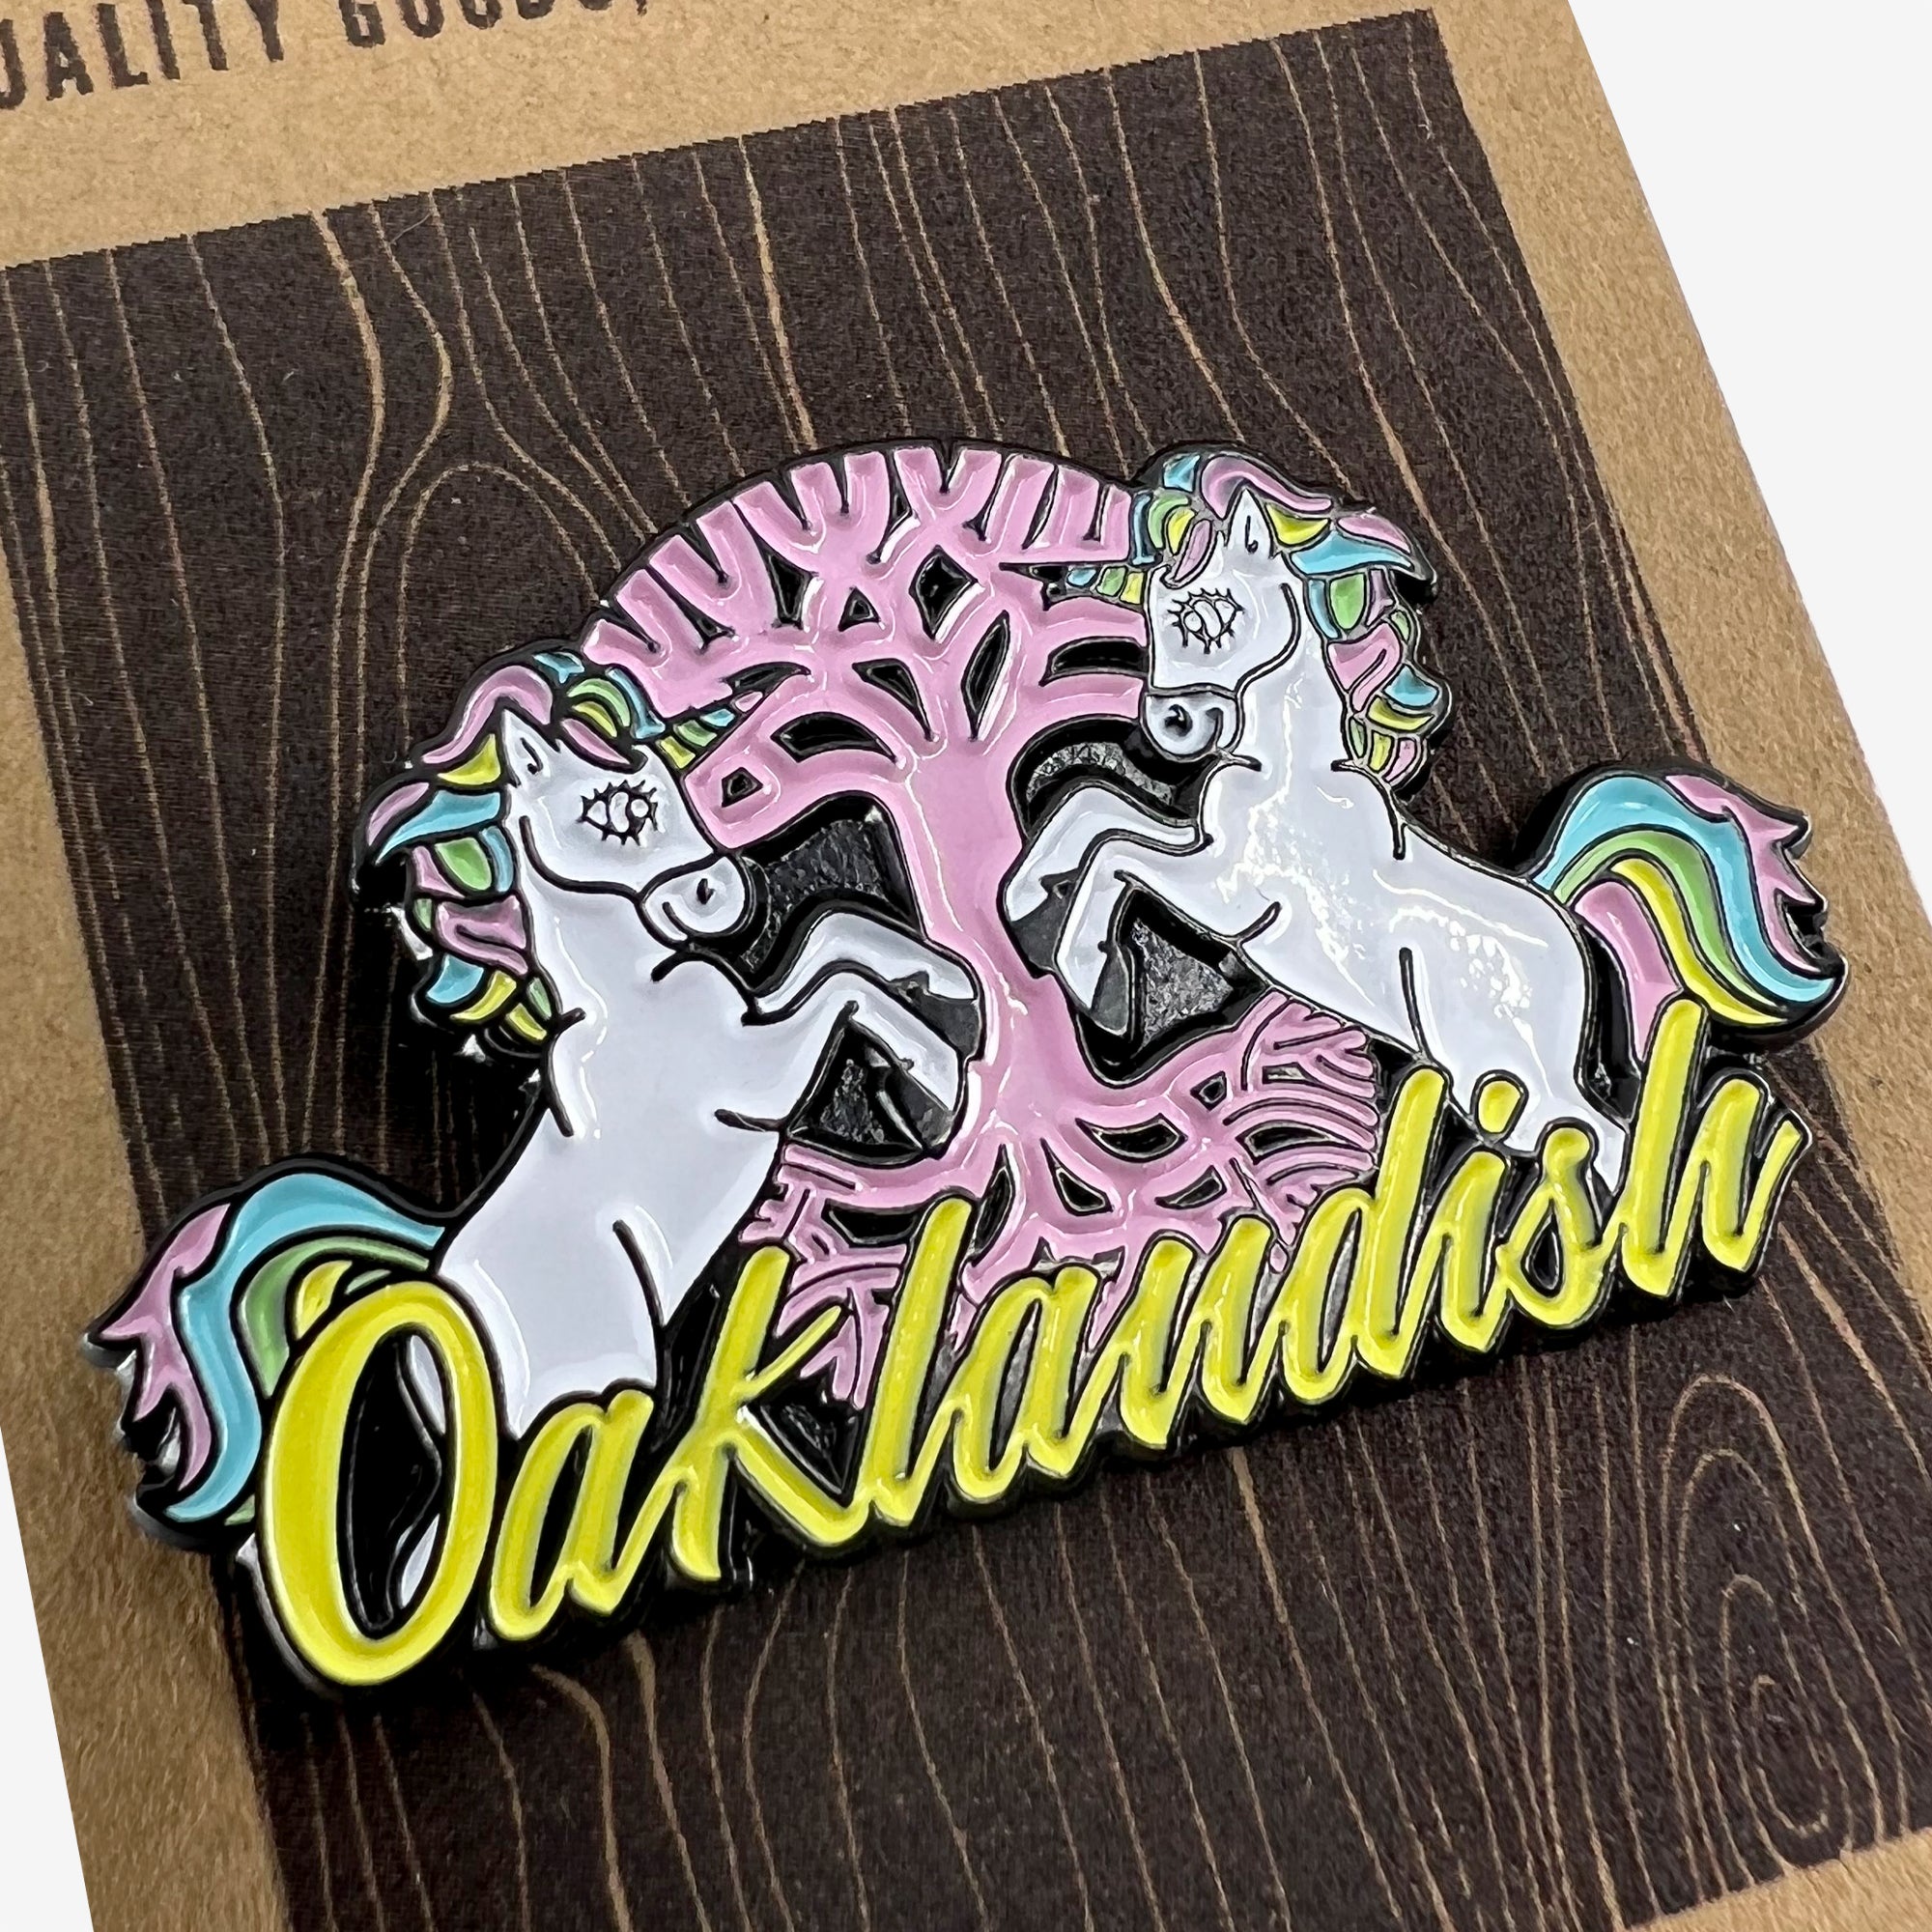 Close-up of enamel lapel pin with yellow Oaklandish wordmark, pink tree logo, and two white unicorns.